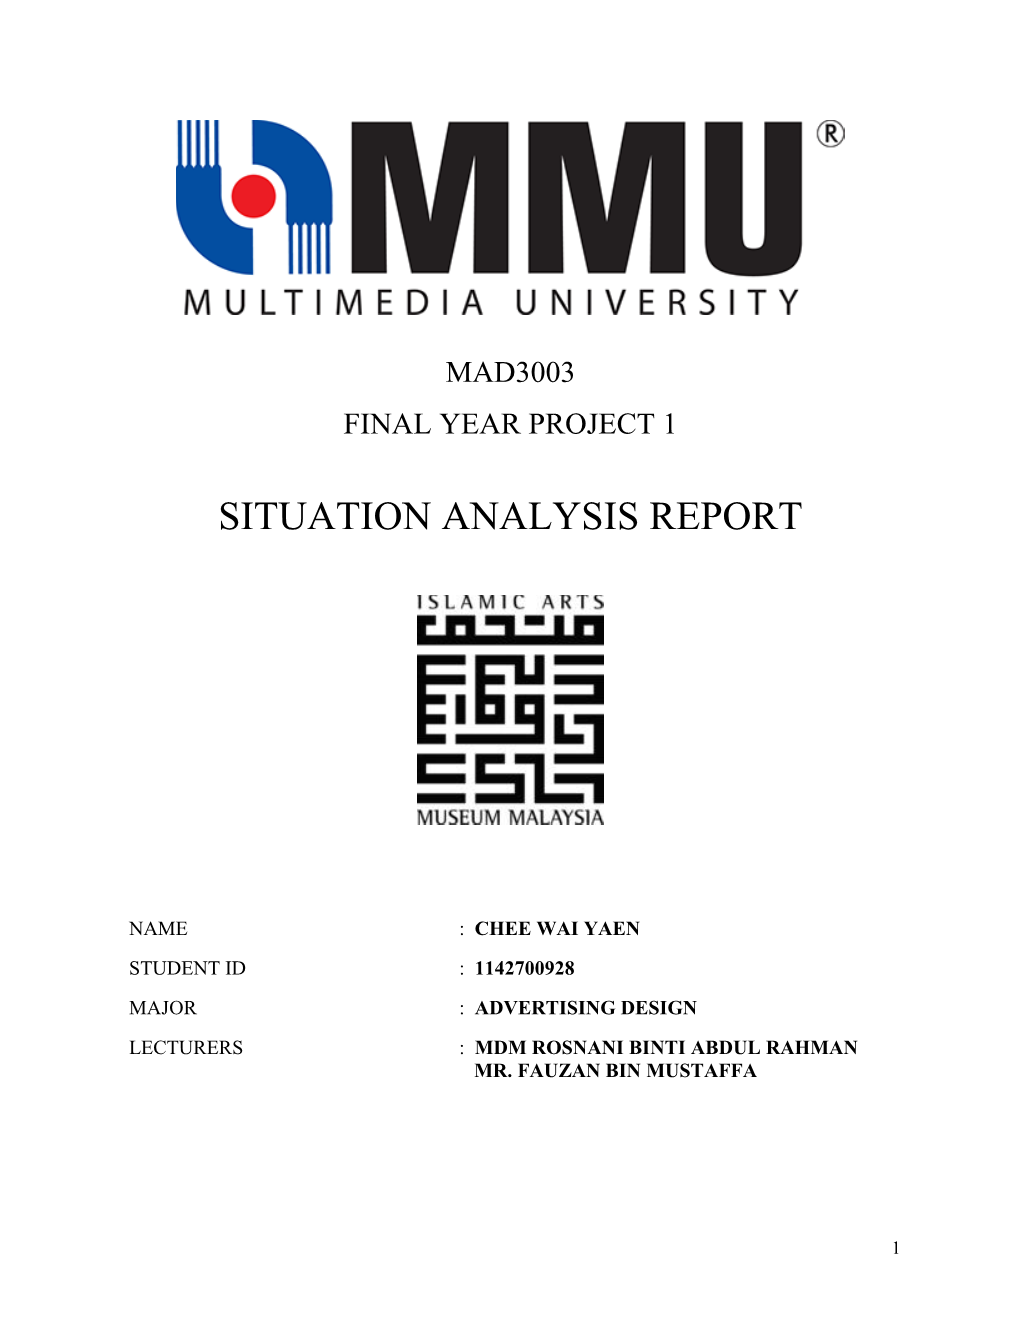 Situation Analysis Report